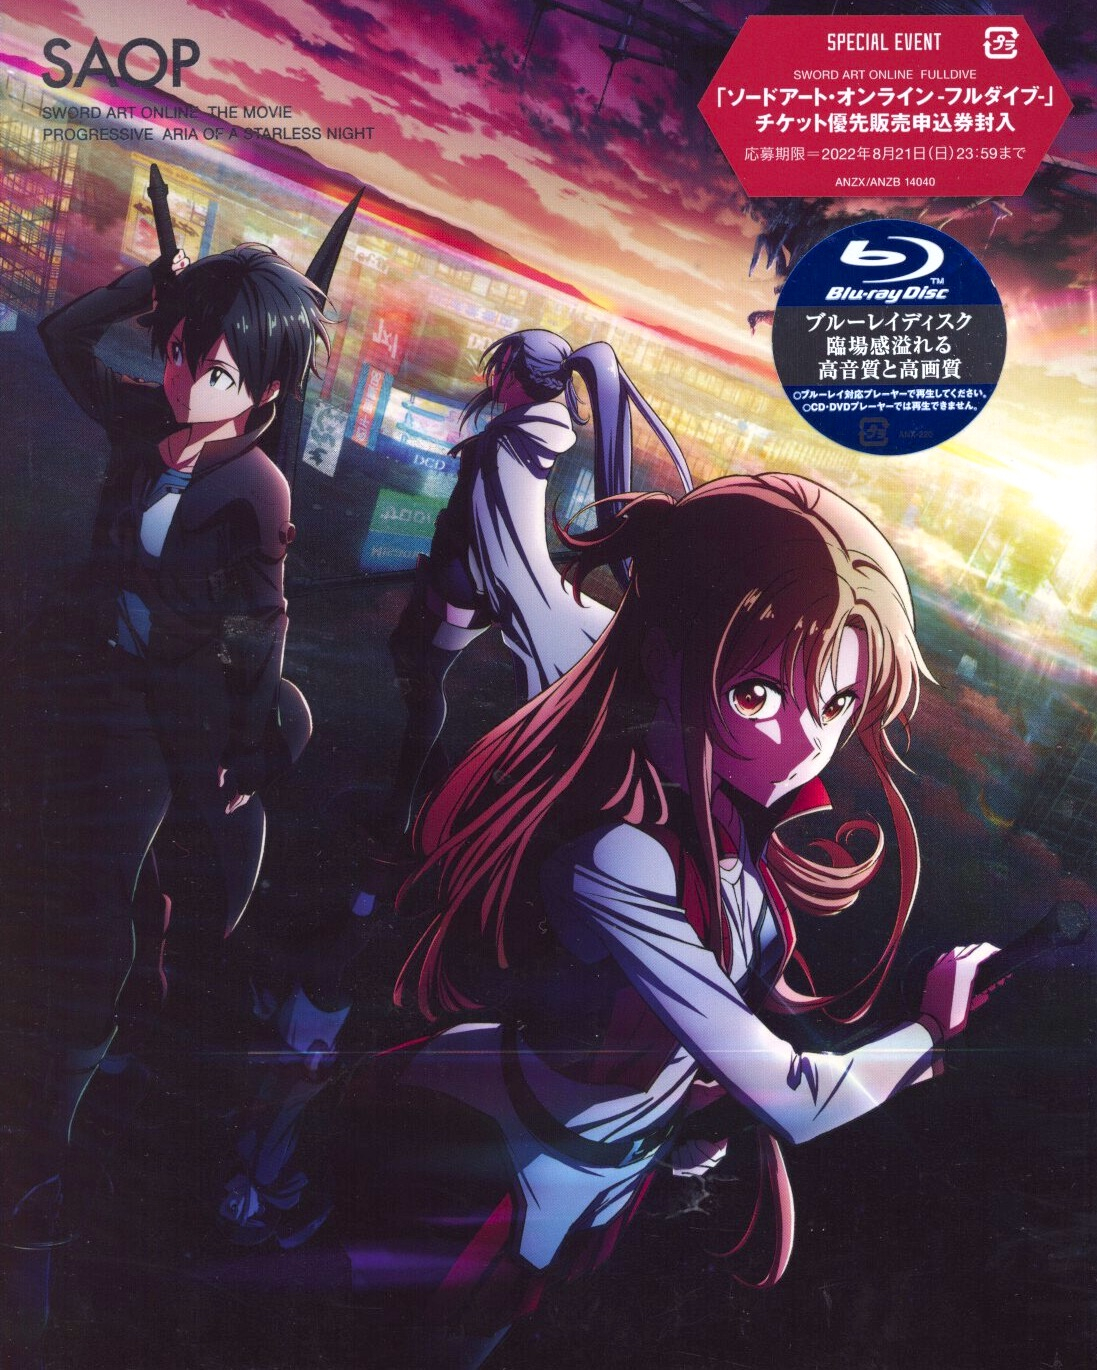 Ijiranaide, Nagatoro-san (DVD) (2021) Anime